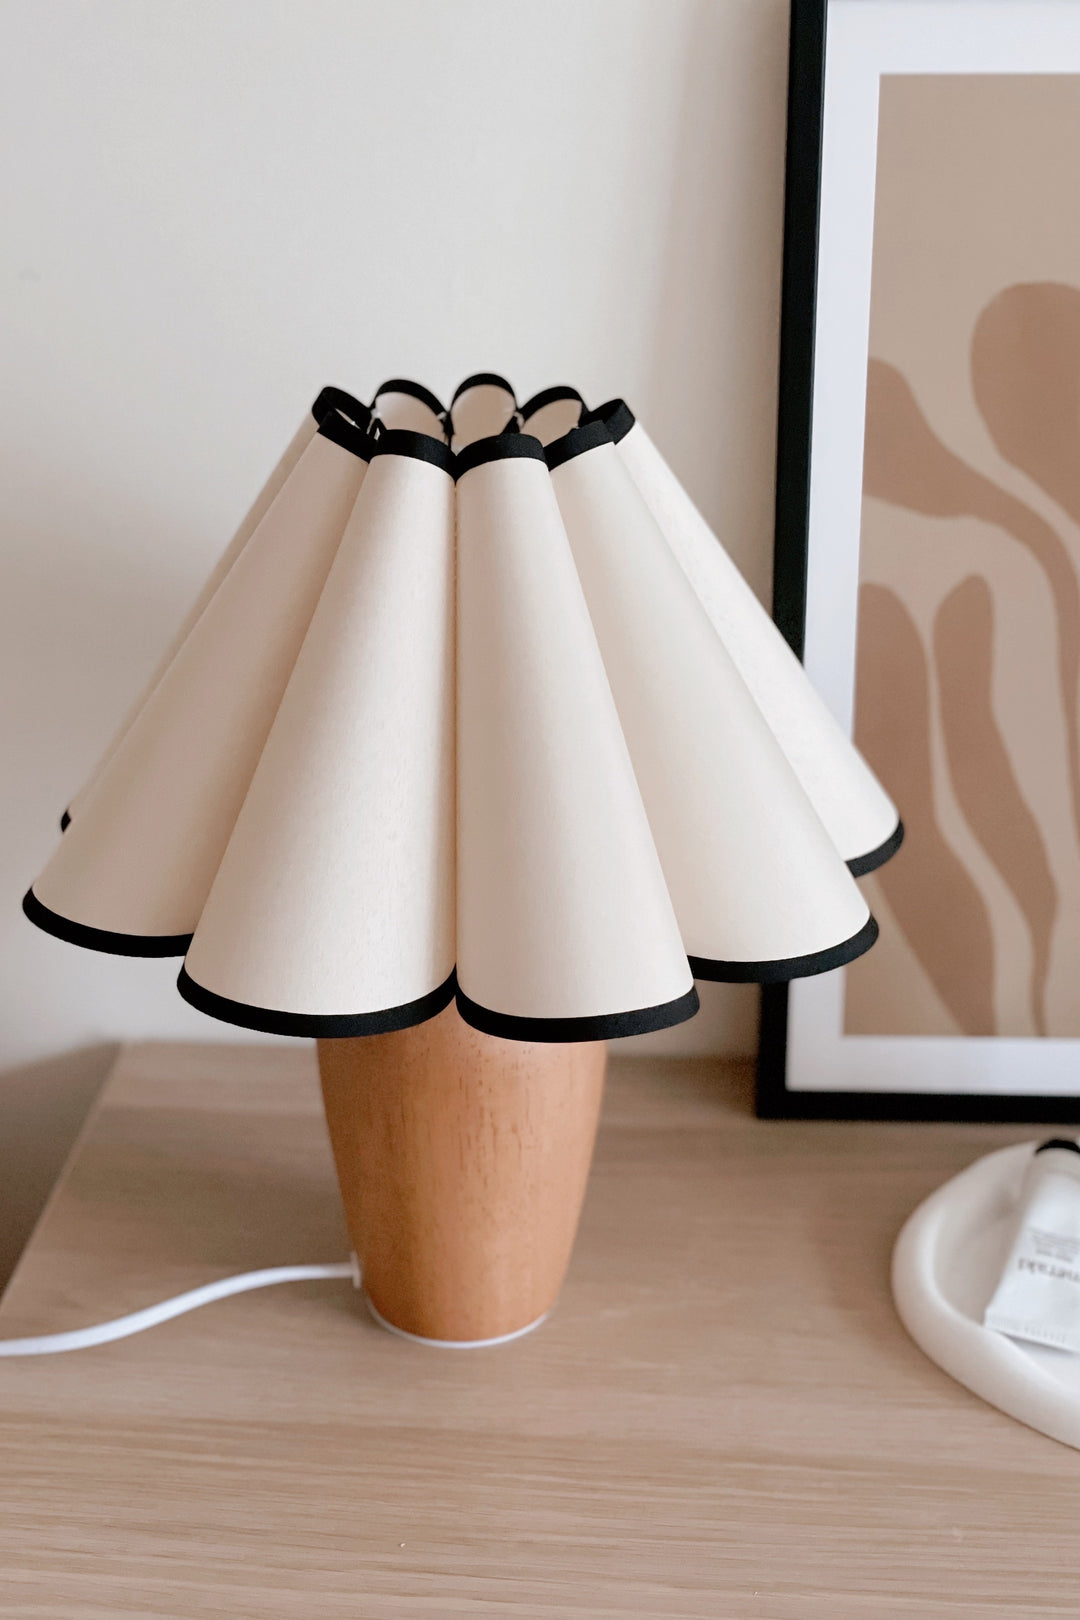 Wooden Harmony Table Lamp